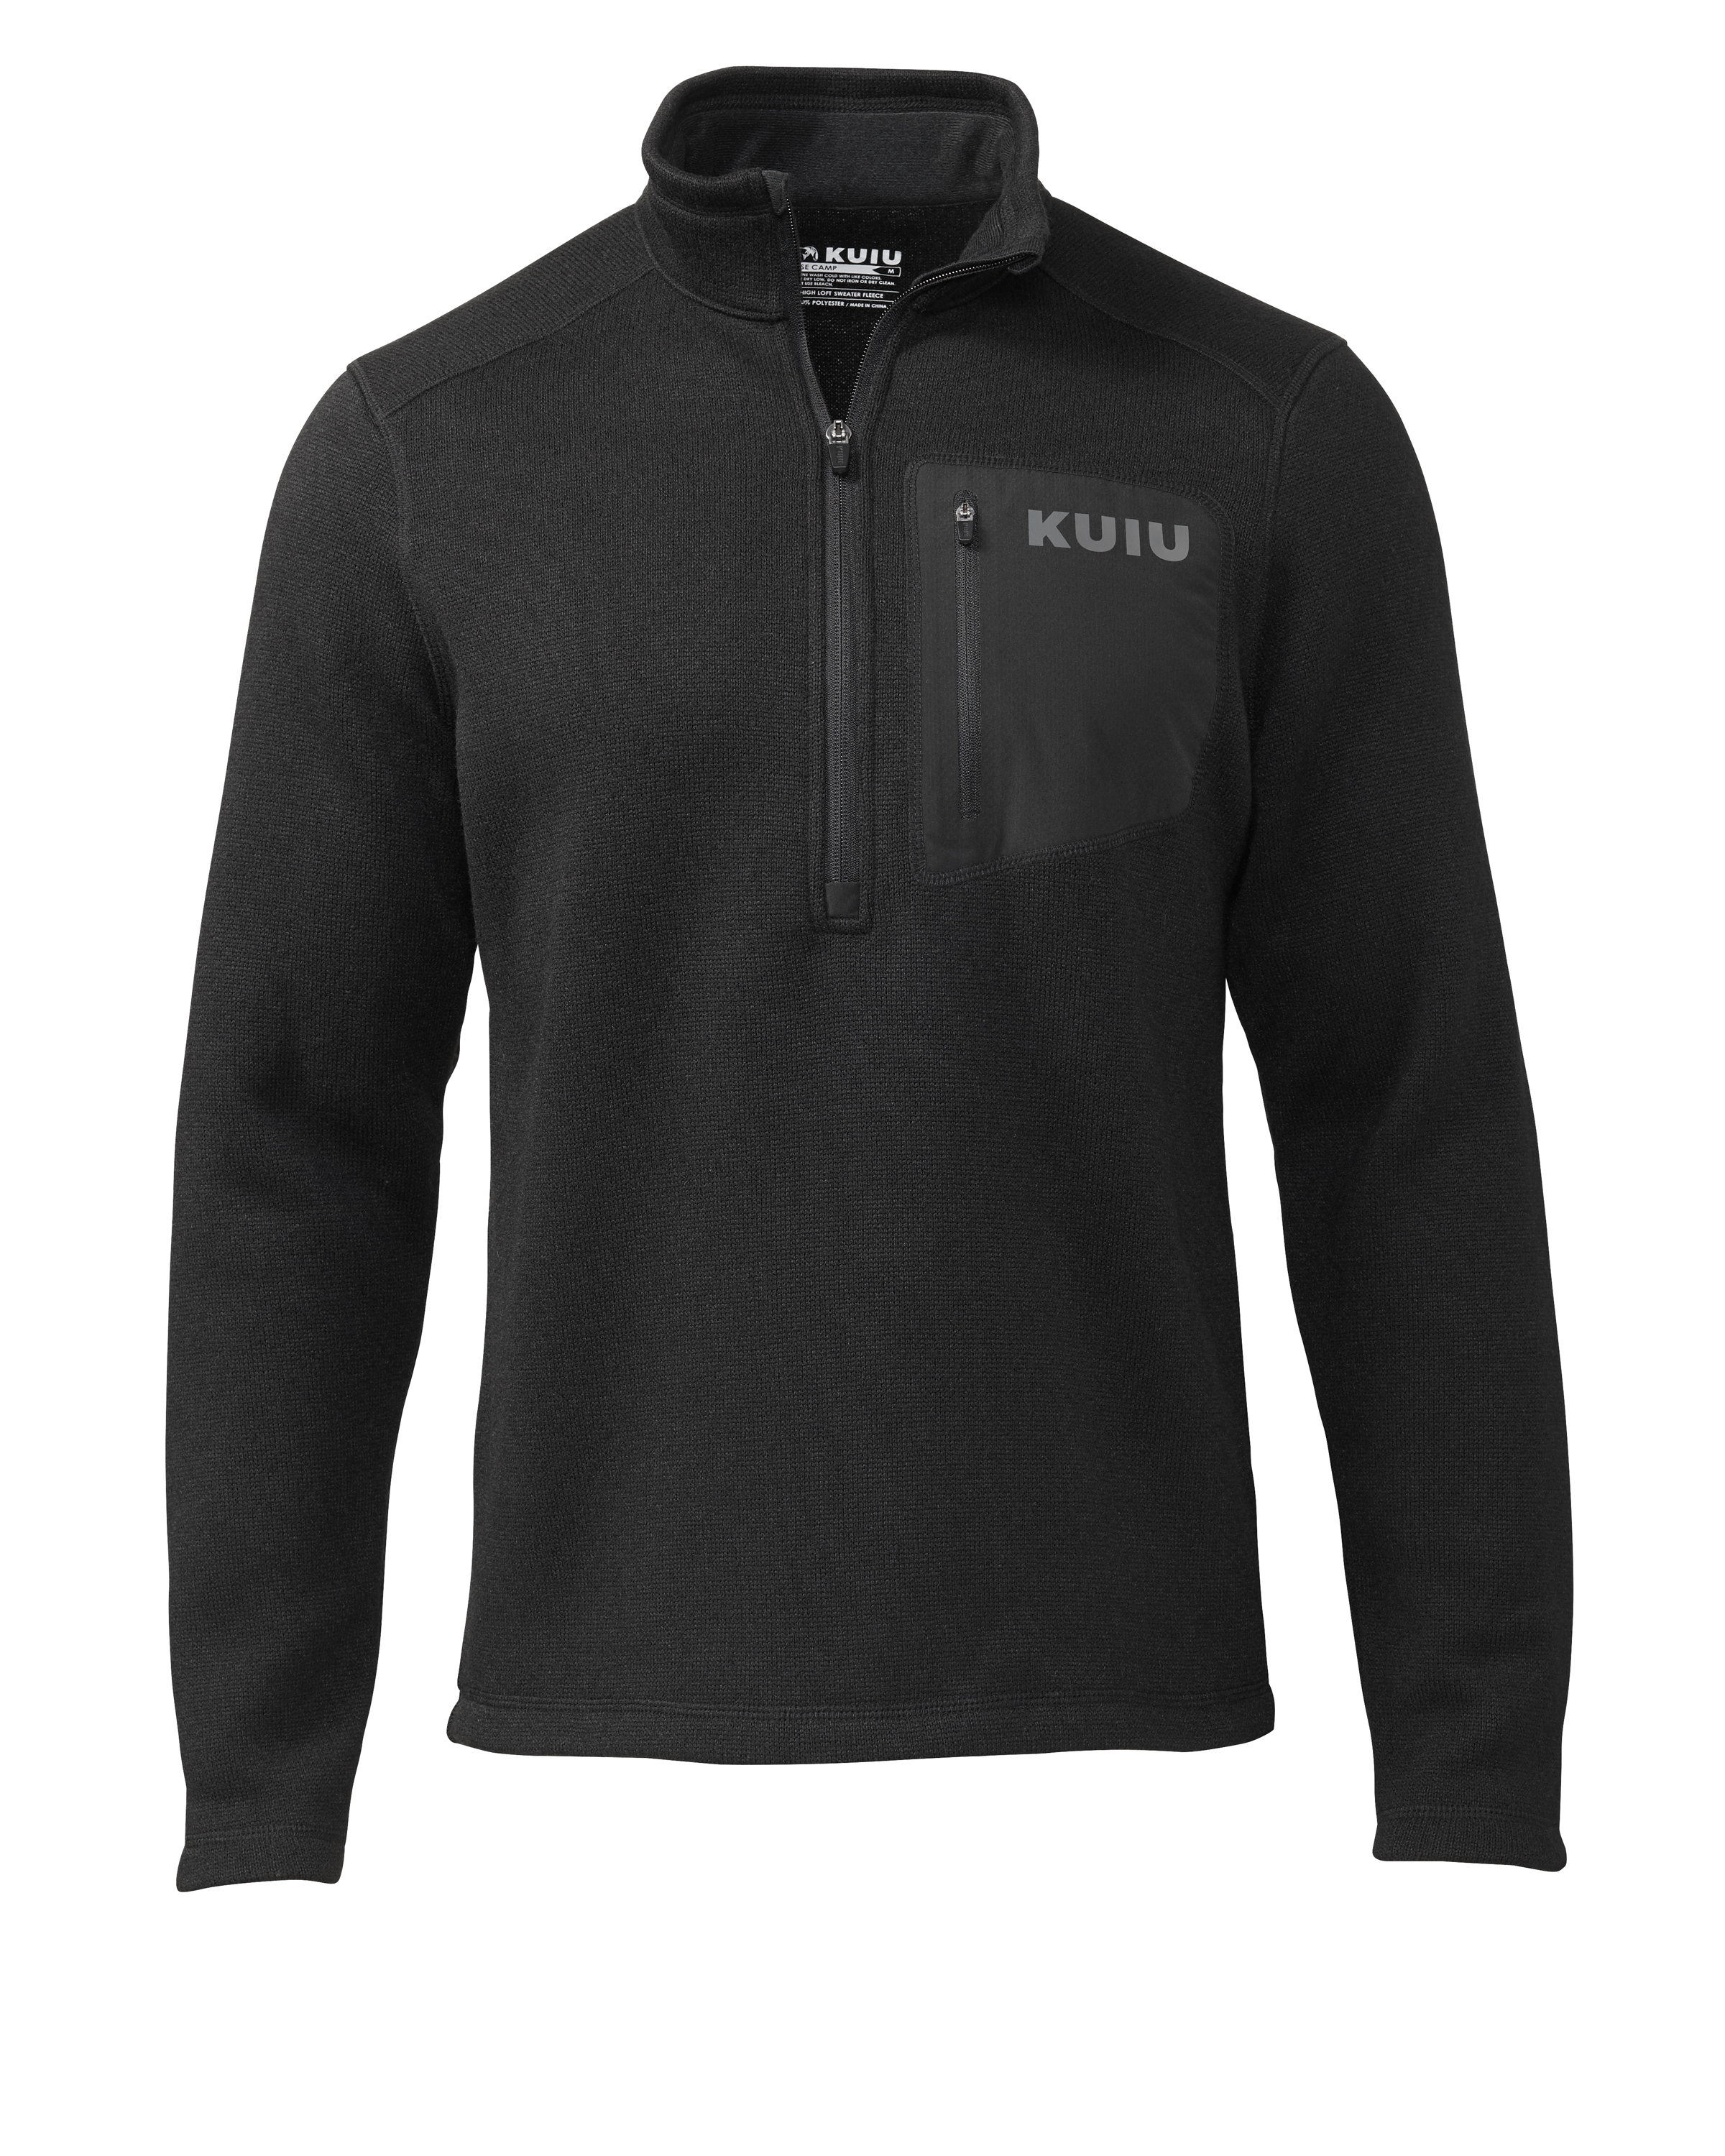 KUIU Base Camp Pullover Sweater in Black | Medium